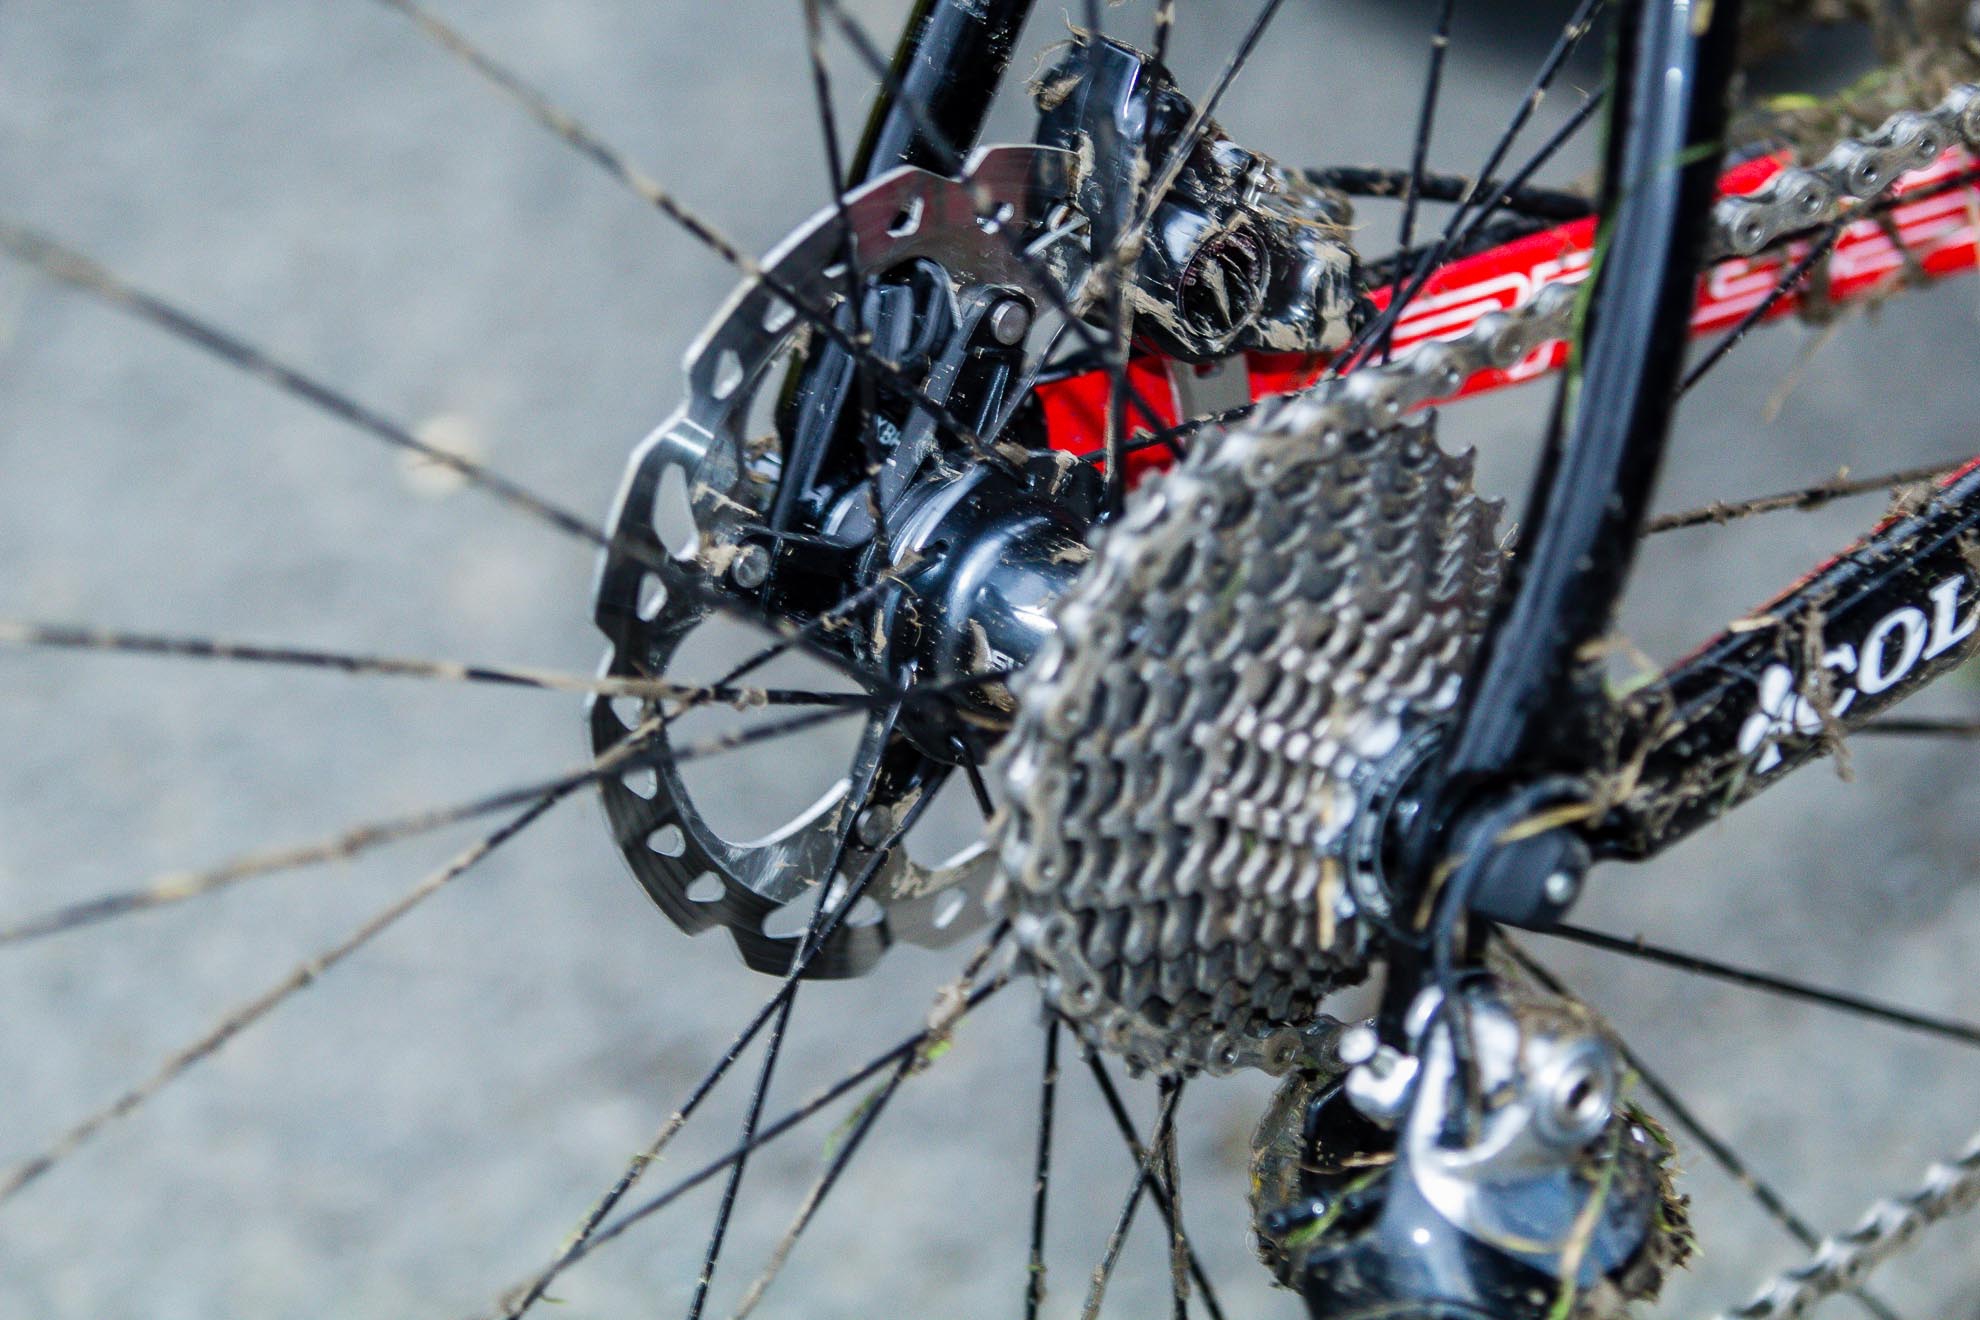 cycle gear disc brake